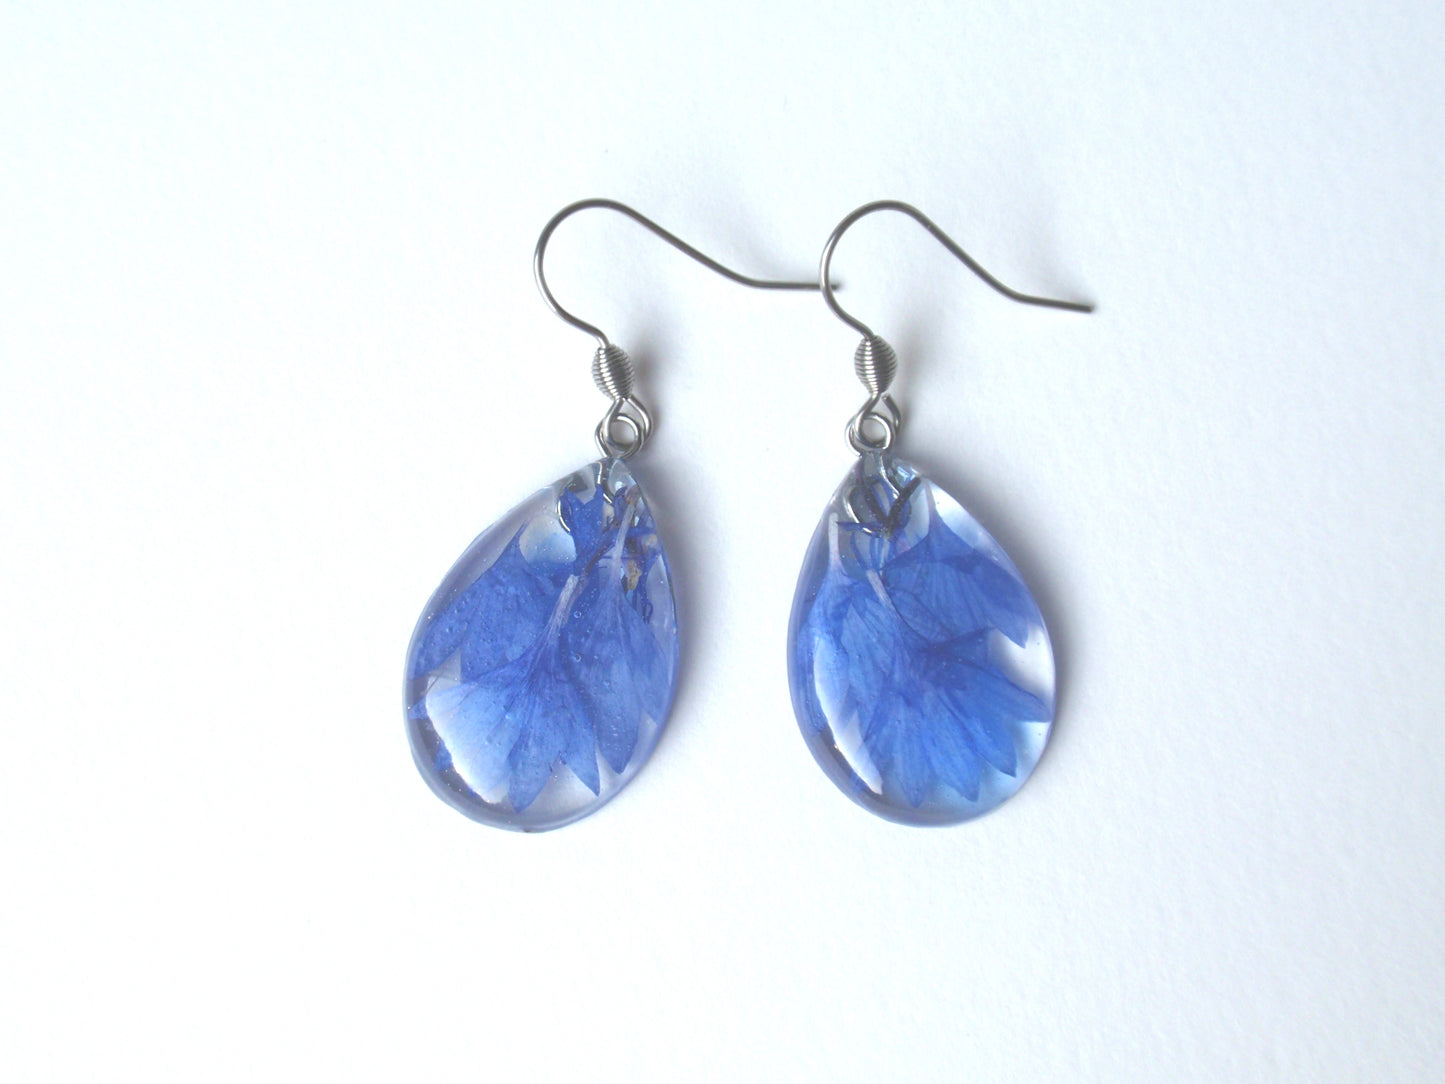 Teardrop earrings with blue Cornflower, bridesmaid jewelry